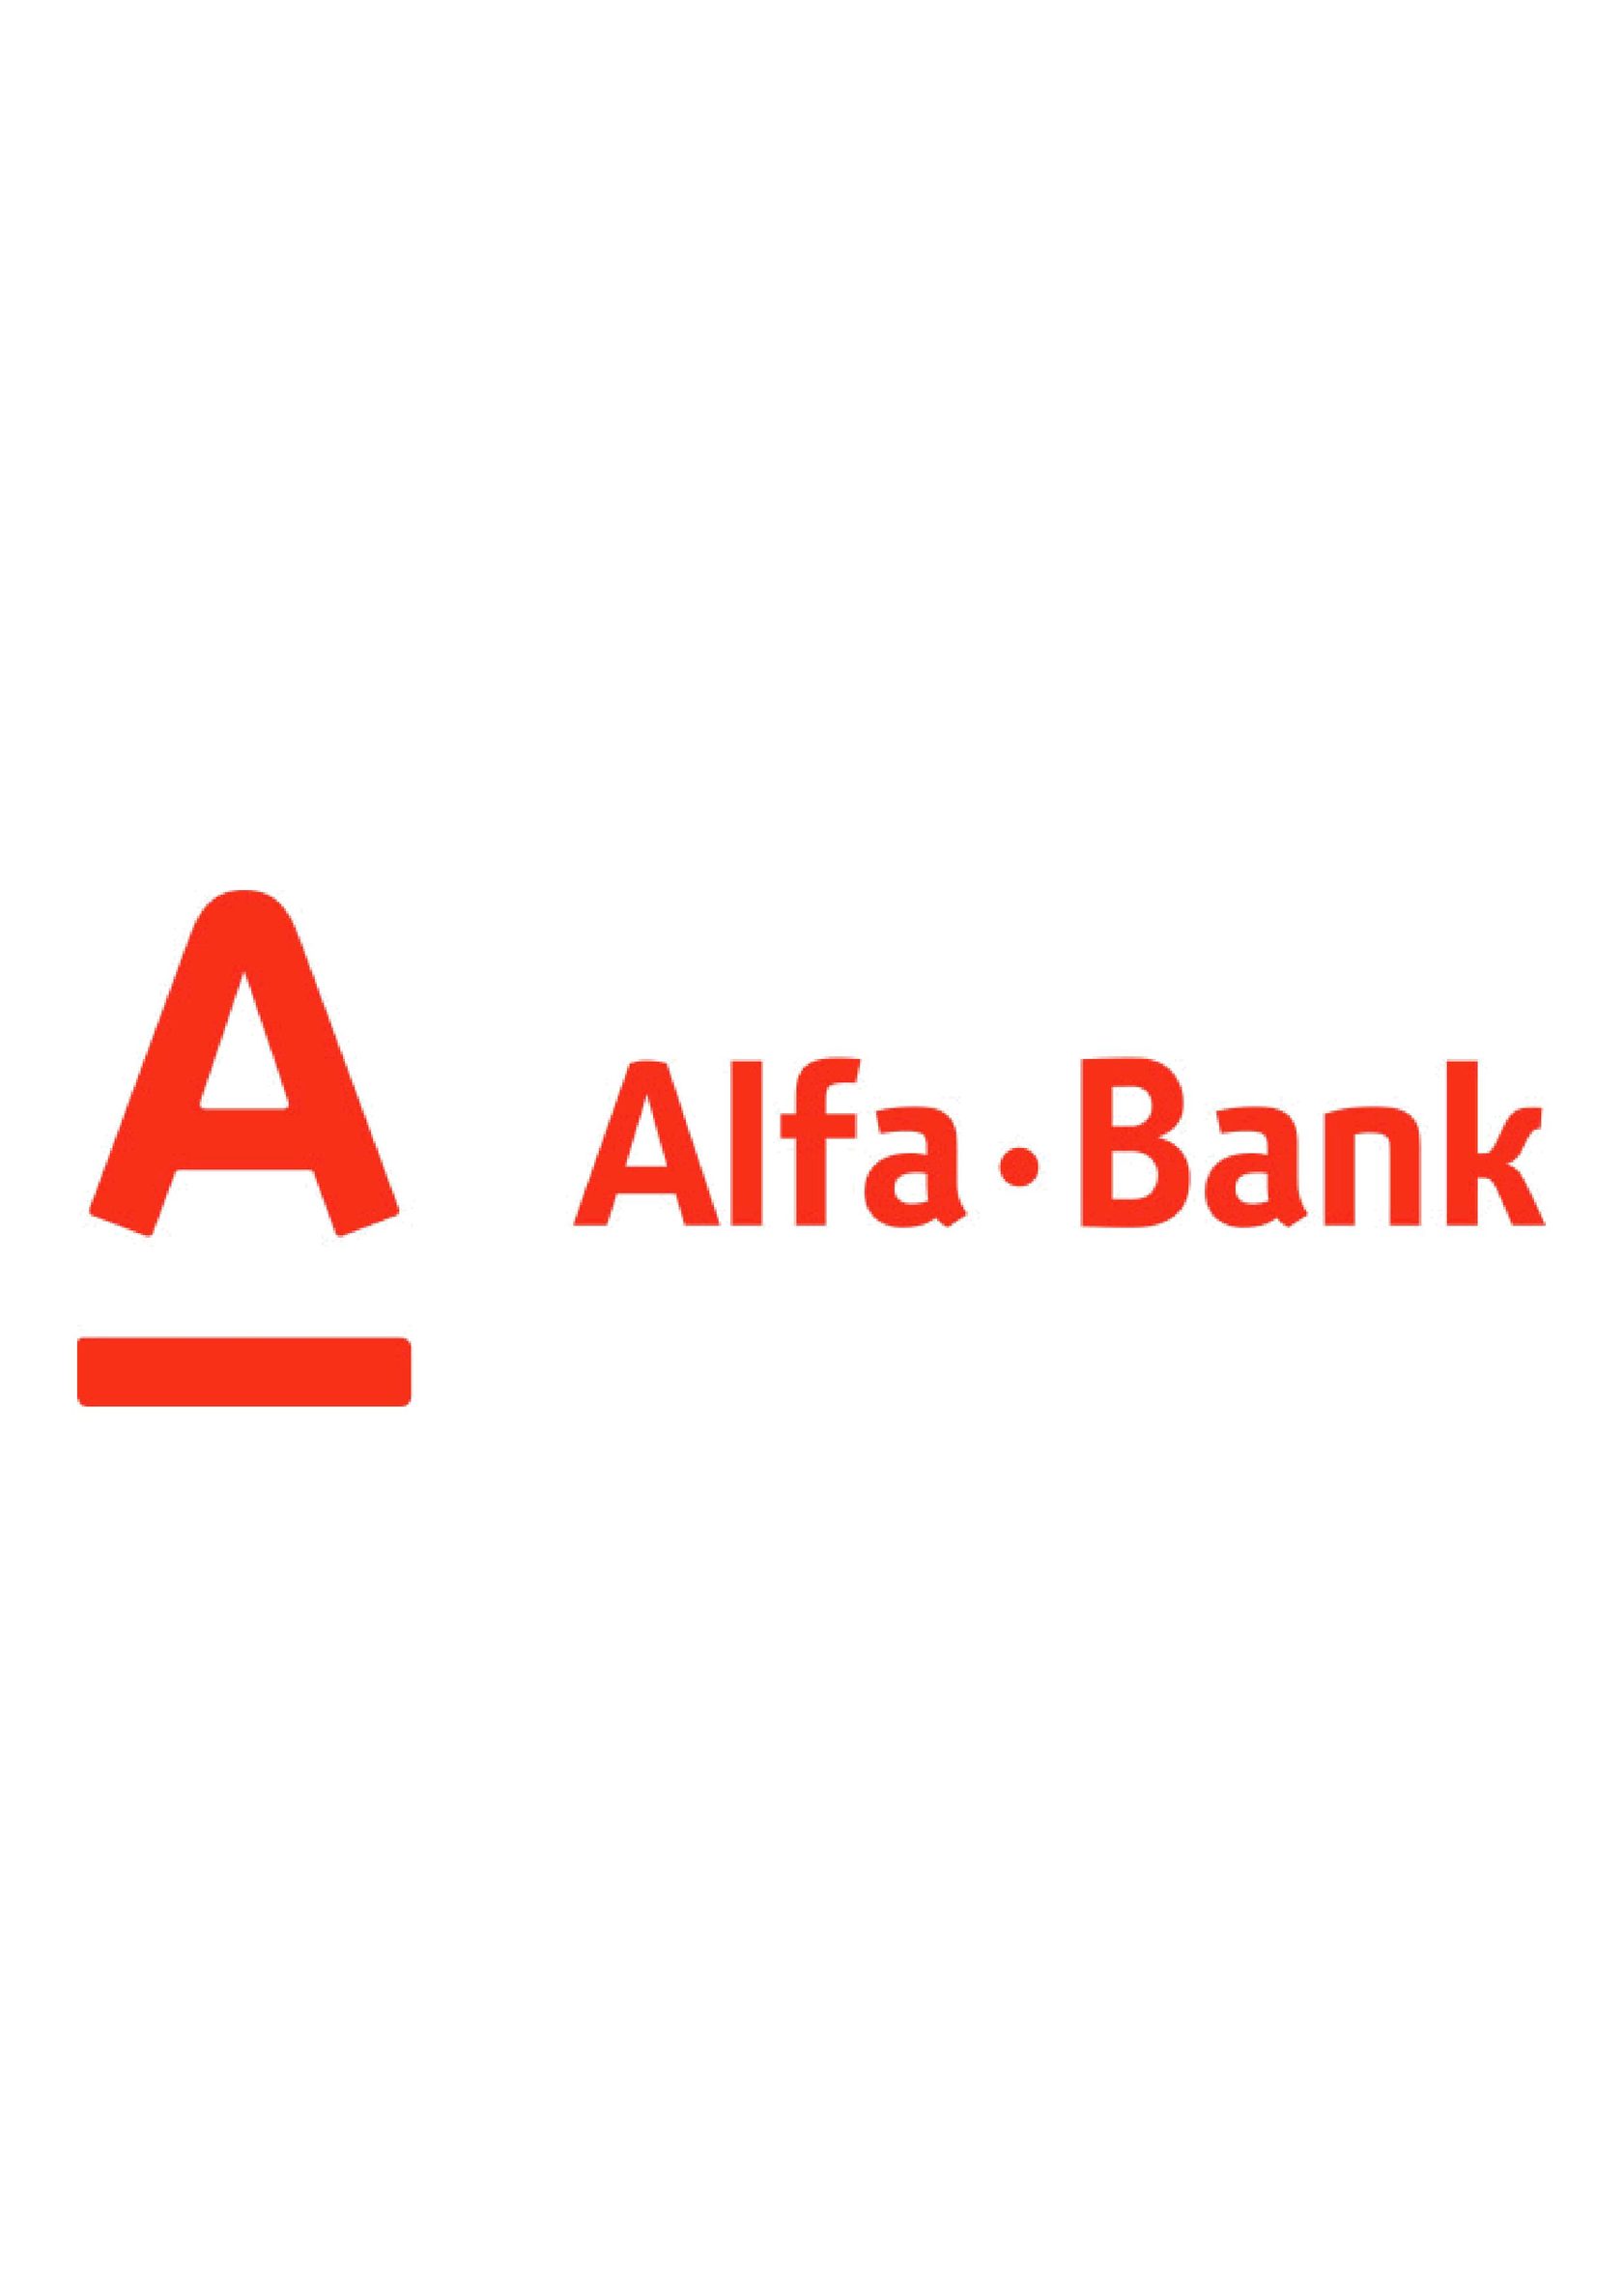 Link alfabank. Логотип Альфа банка. Альфа банк старое лого.